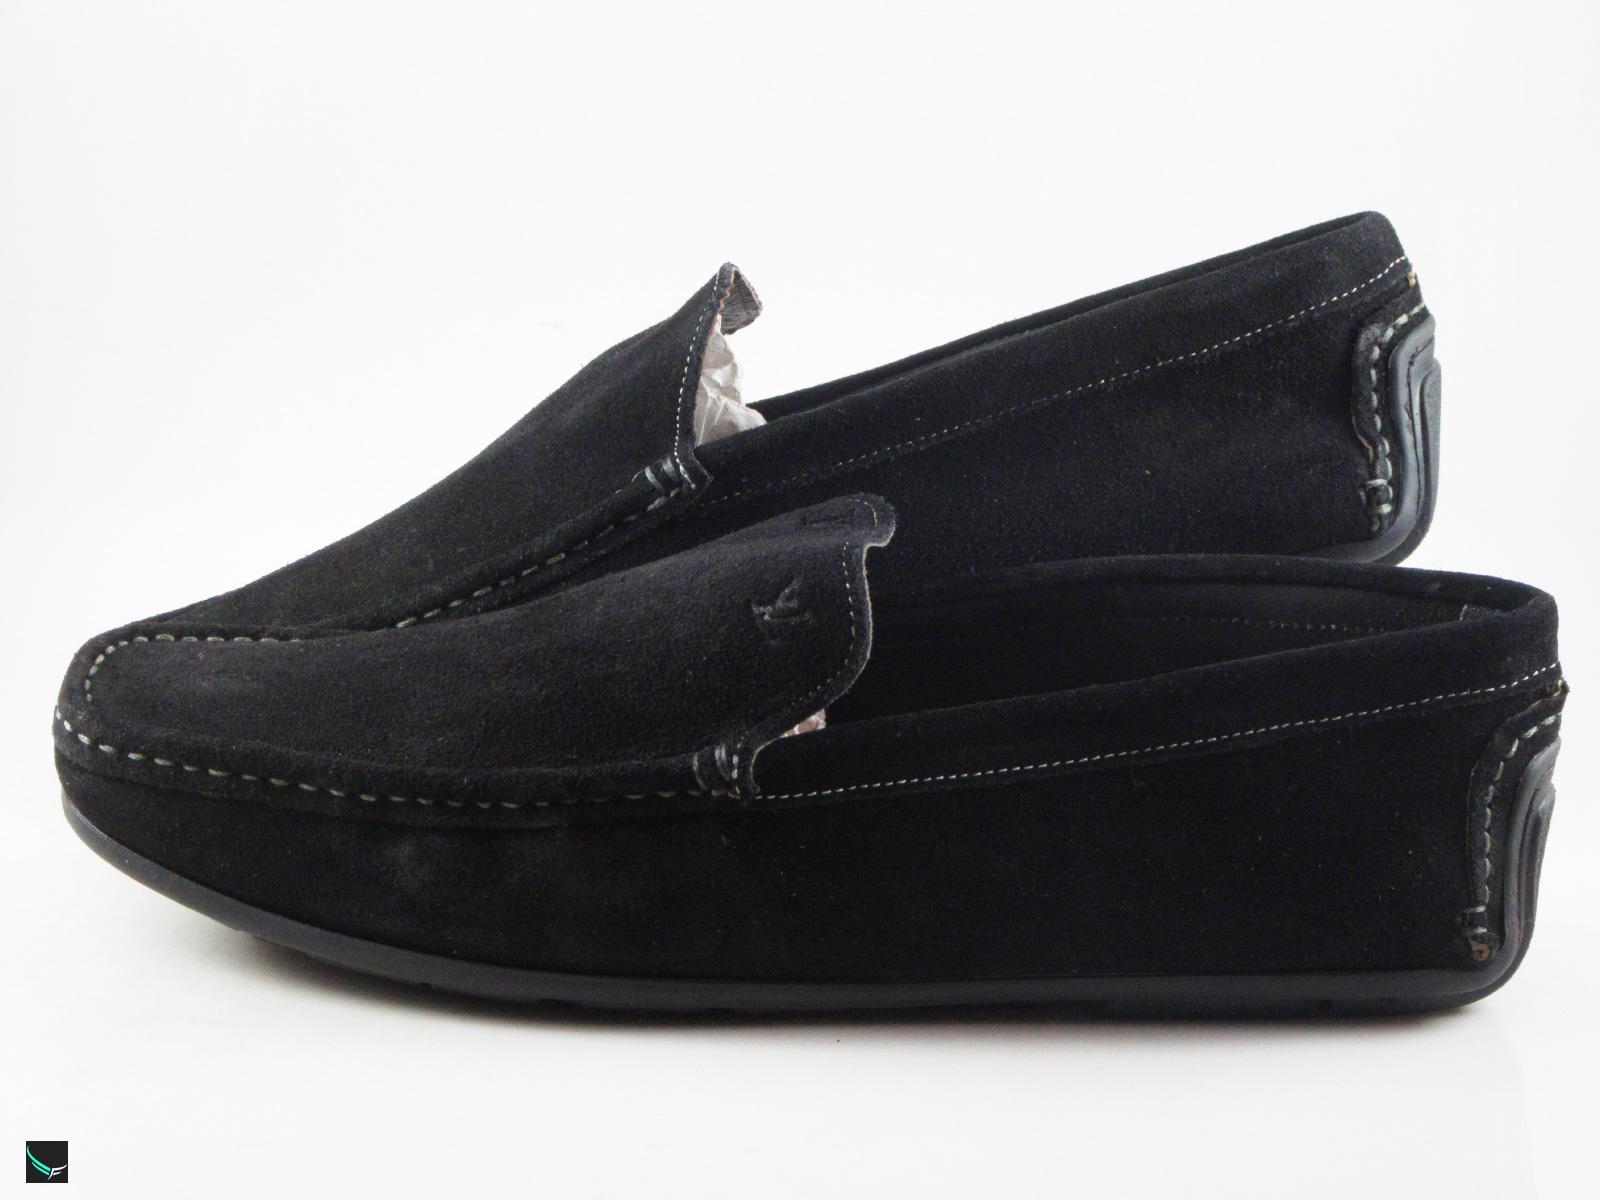 Elegant Plain Black Loafers - 4134 - Leather Collections On Frostfreak.com